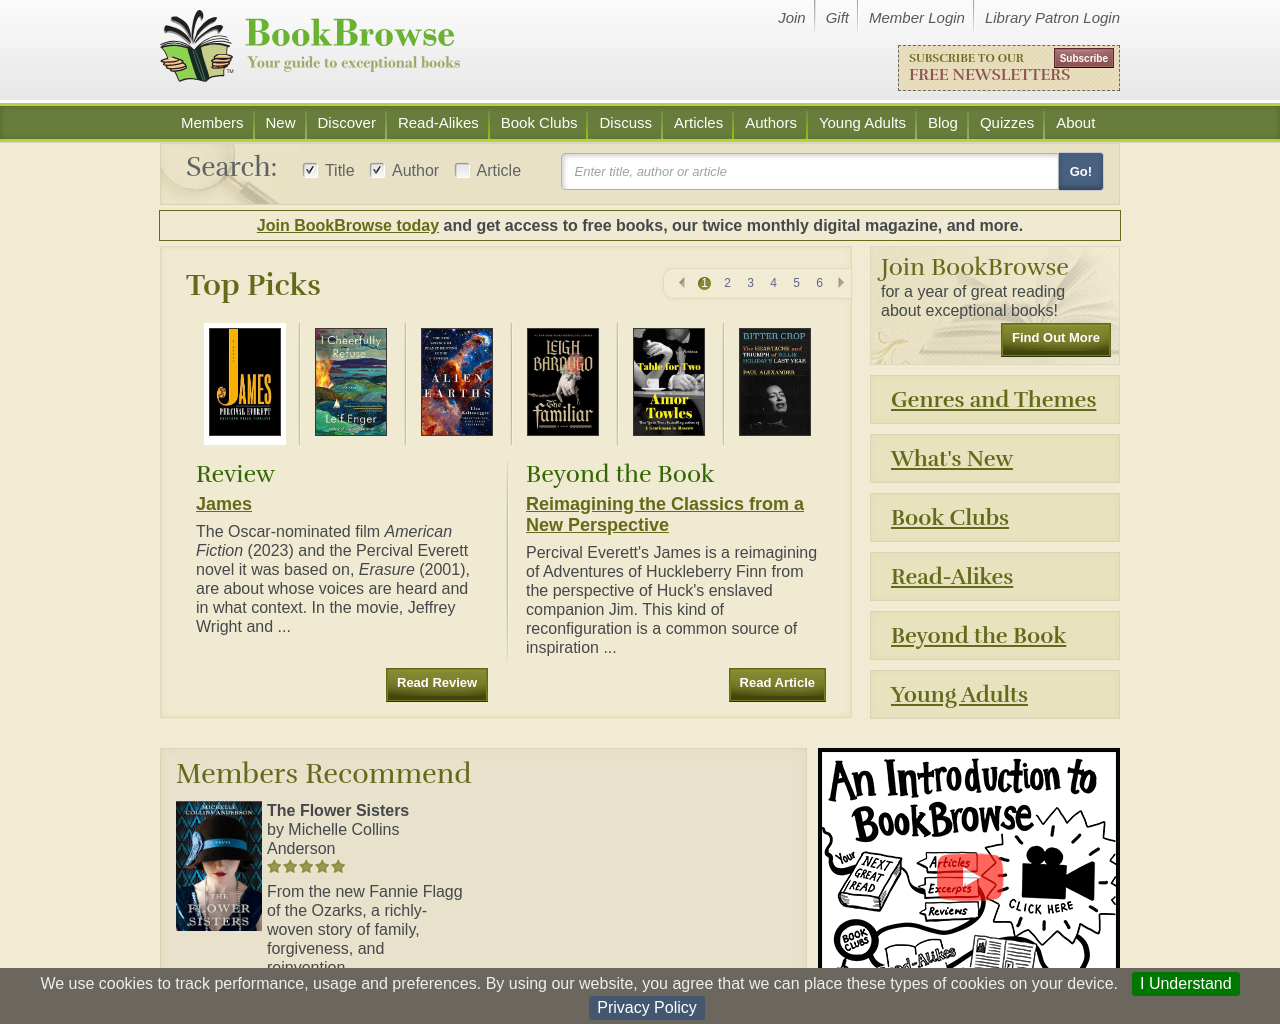 bookbrowse.com